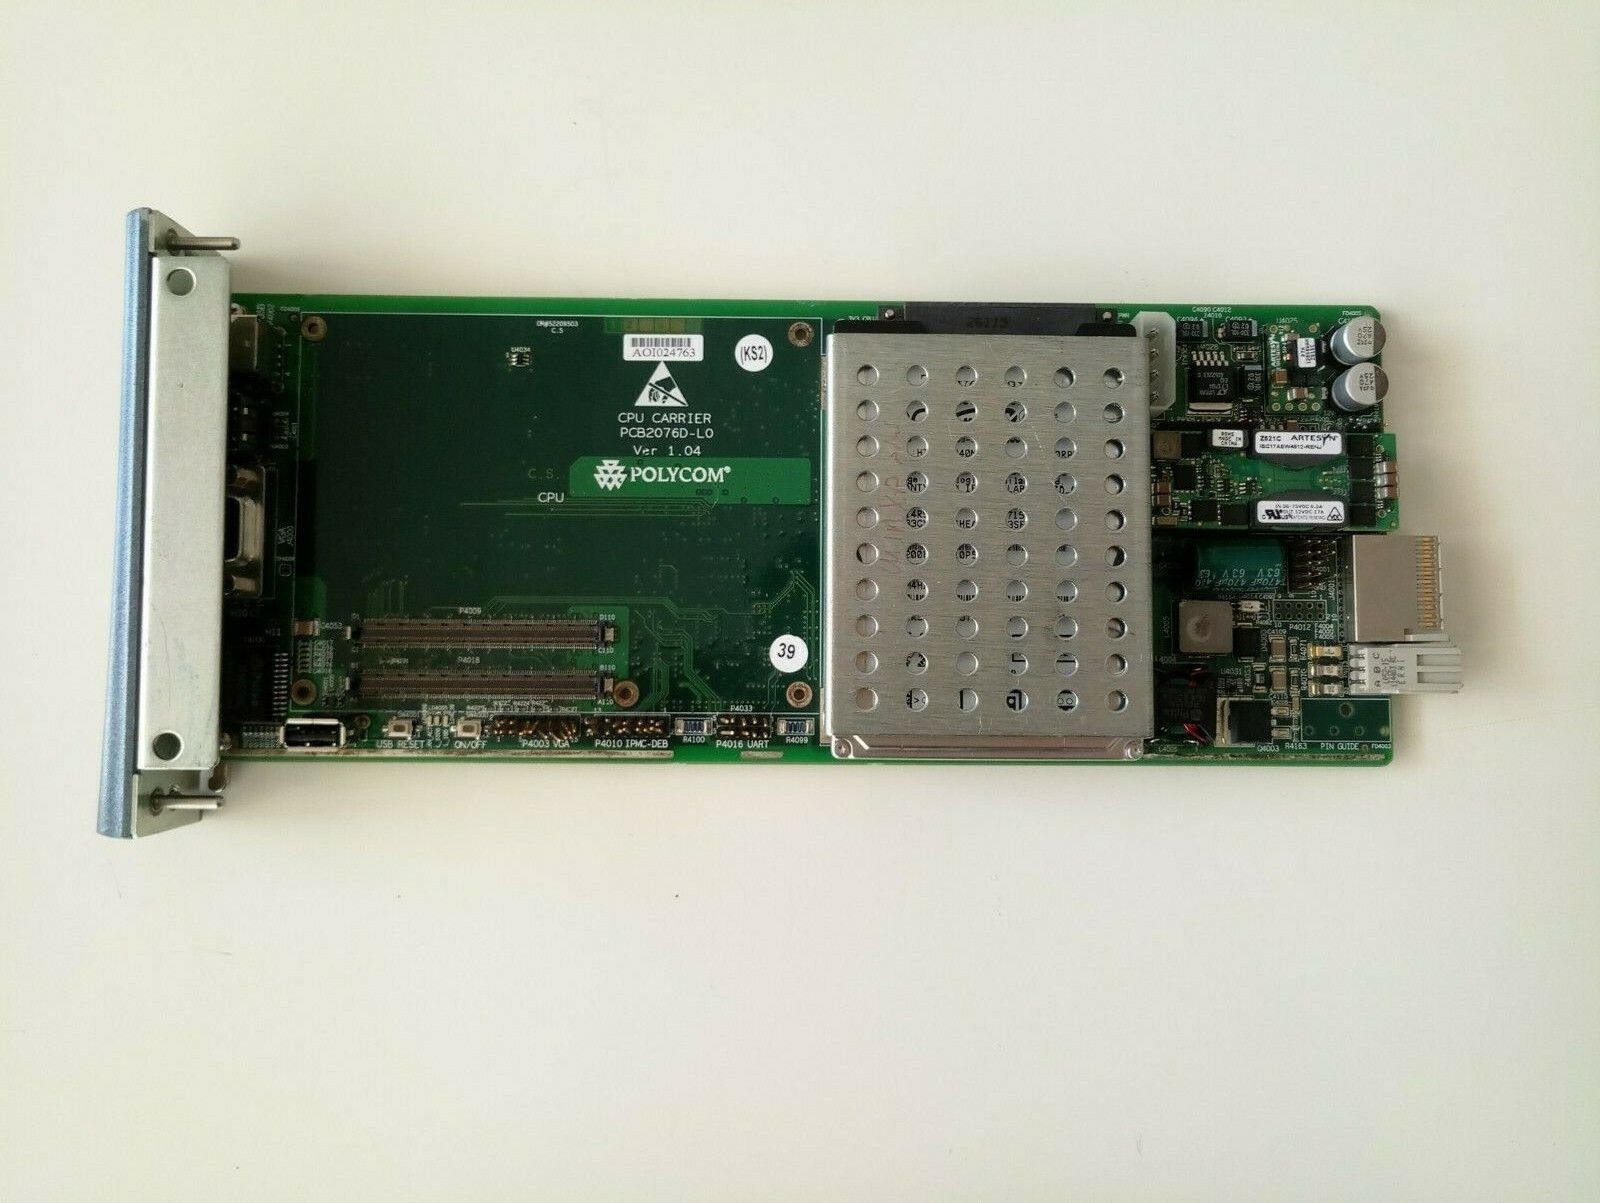 Polycom  BRD2113C-R5 CNTL PCB2076D-L0 CPU Carrier Module for RMX 2